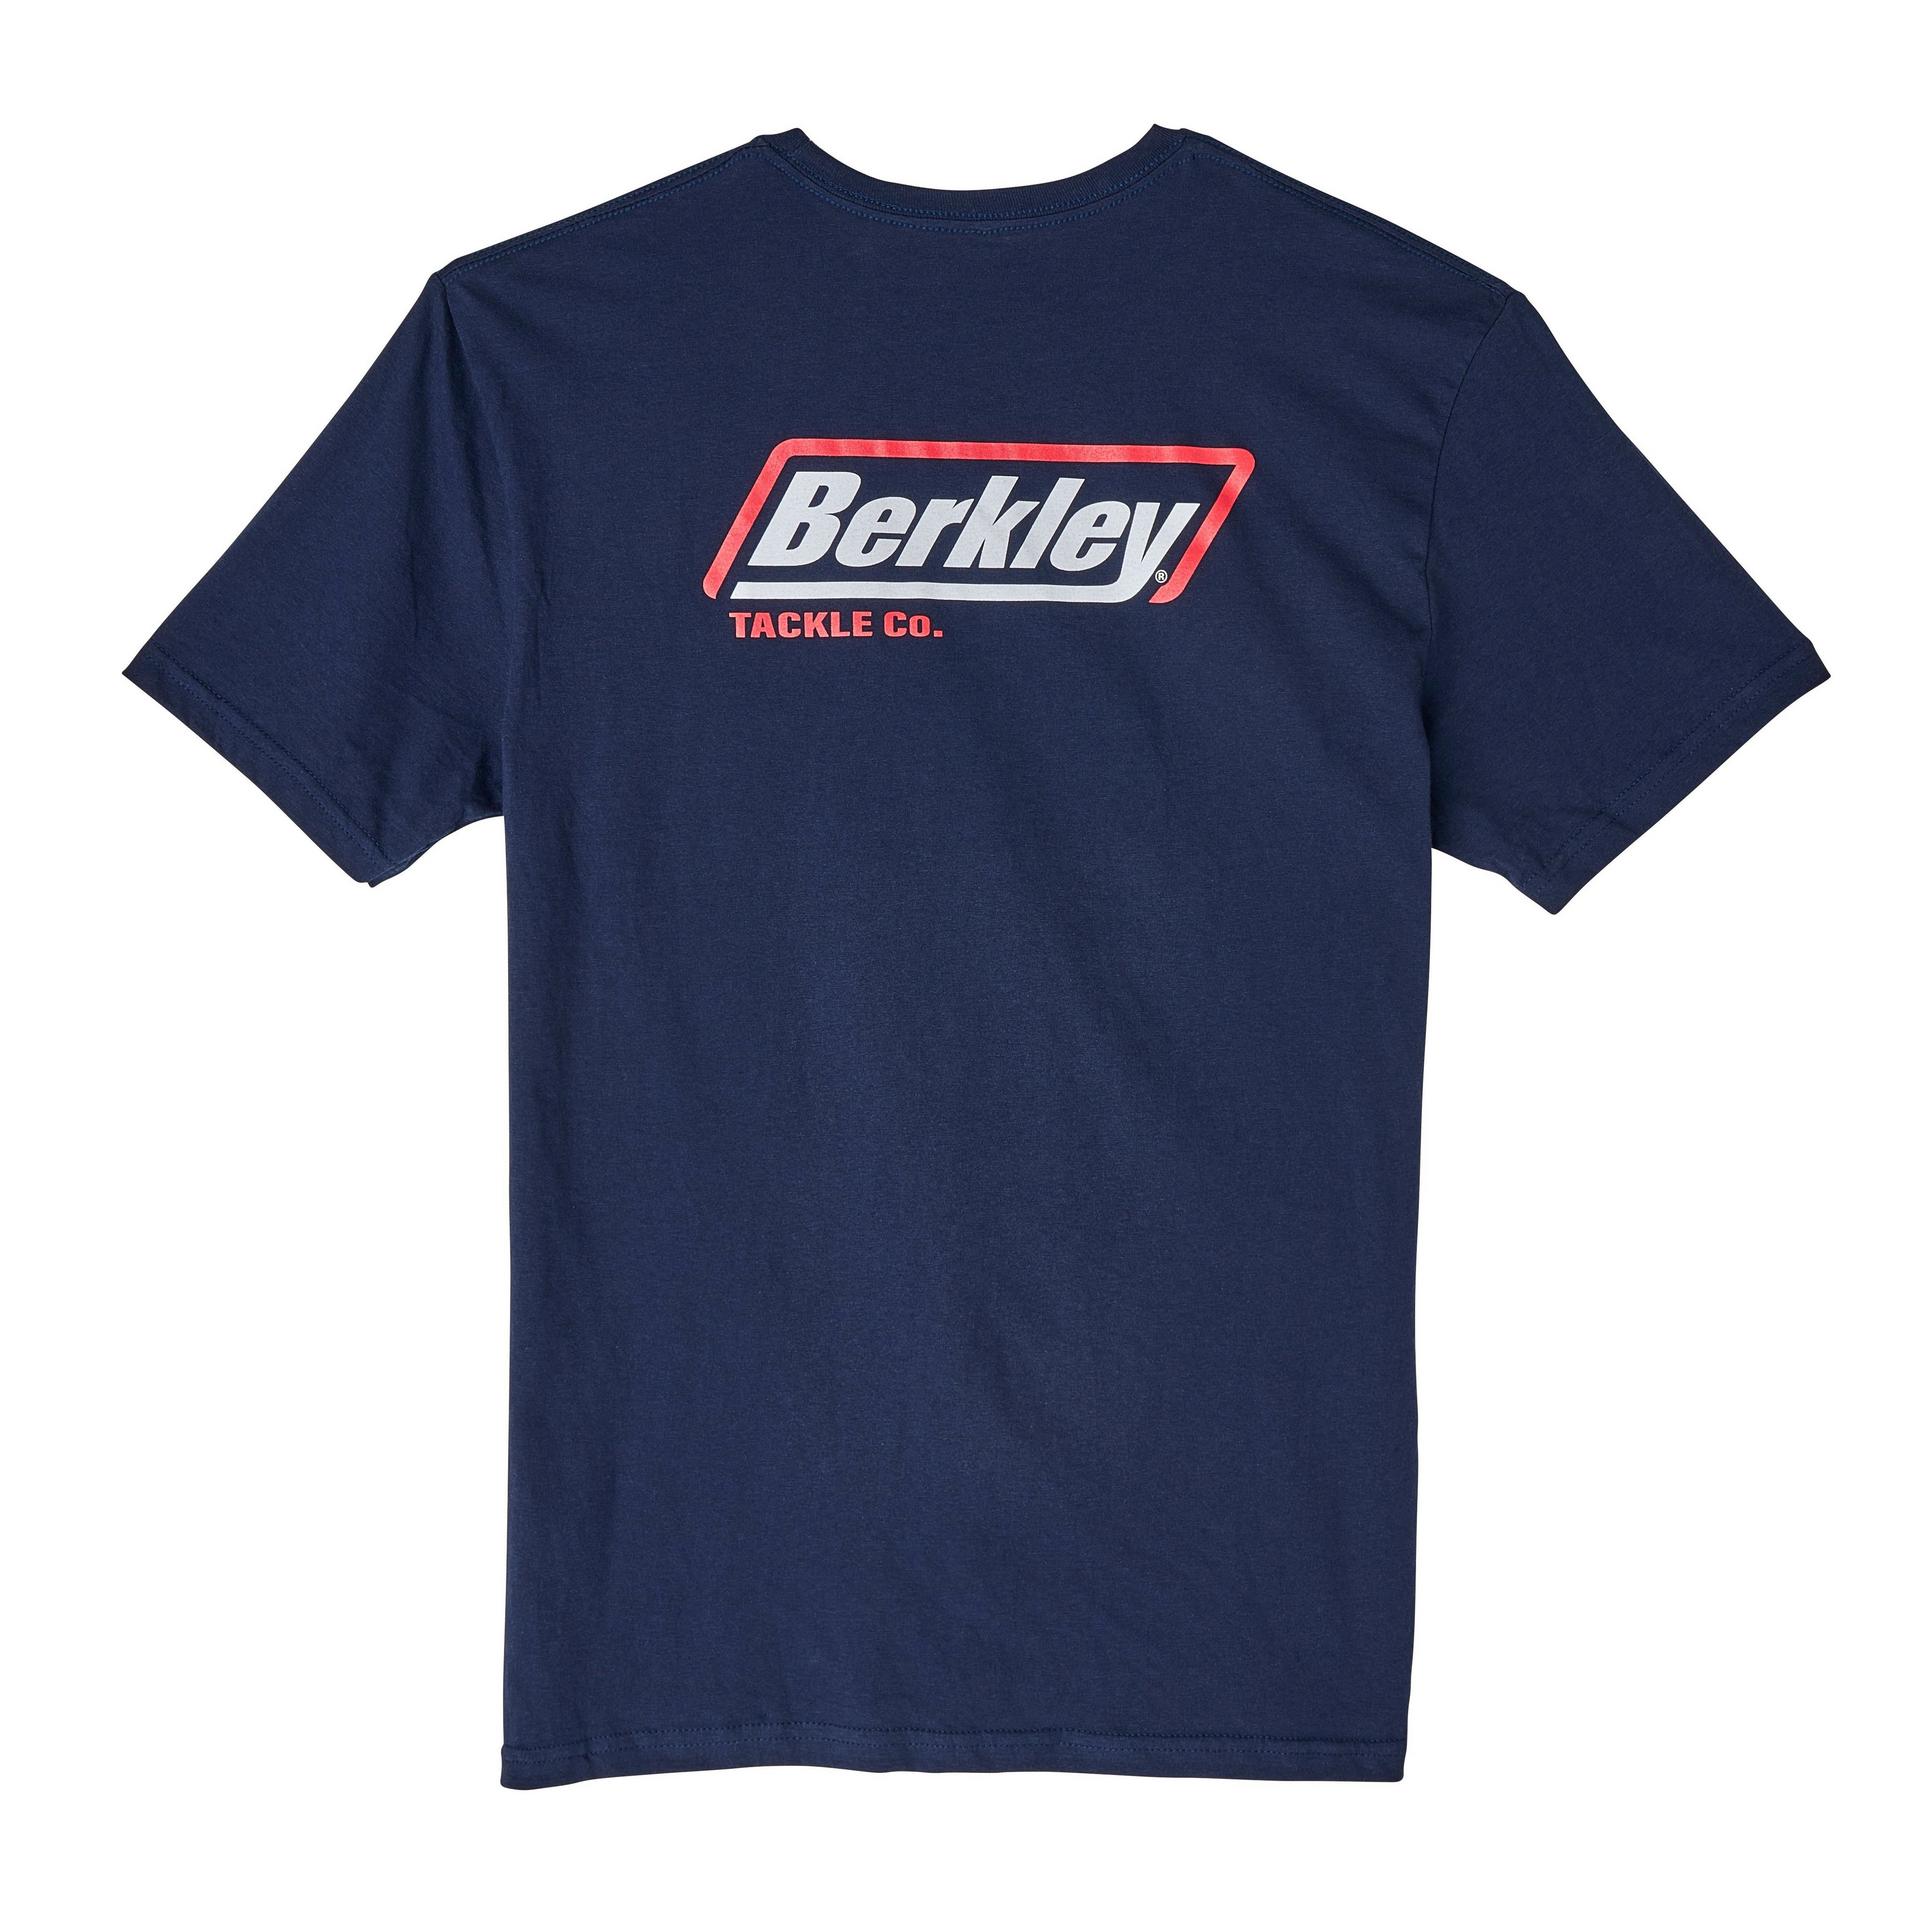 Berkley ShortSleeveSplitterT-Shirt Navy alt2 | Berkley Fishing